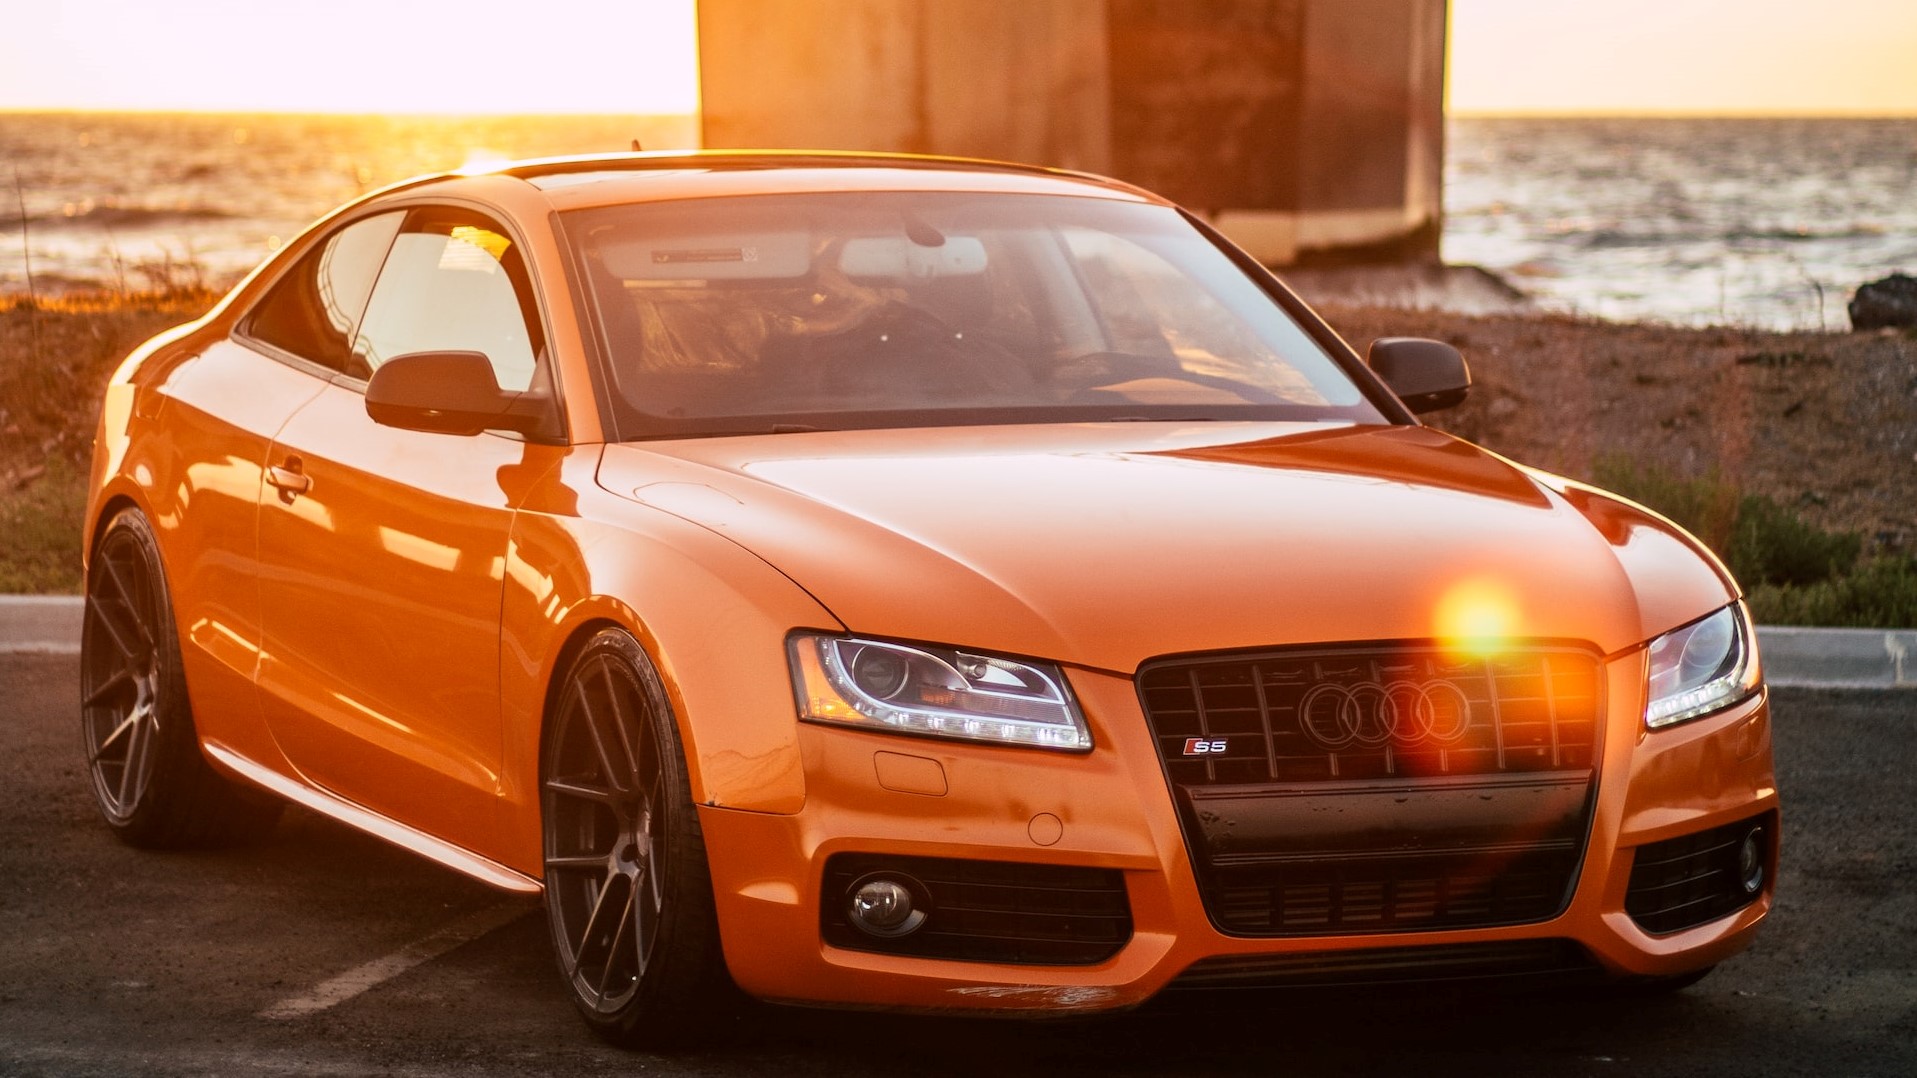 Audi S5 Sunset | Goodwill Car Donations